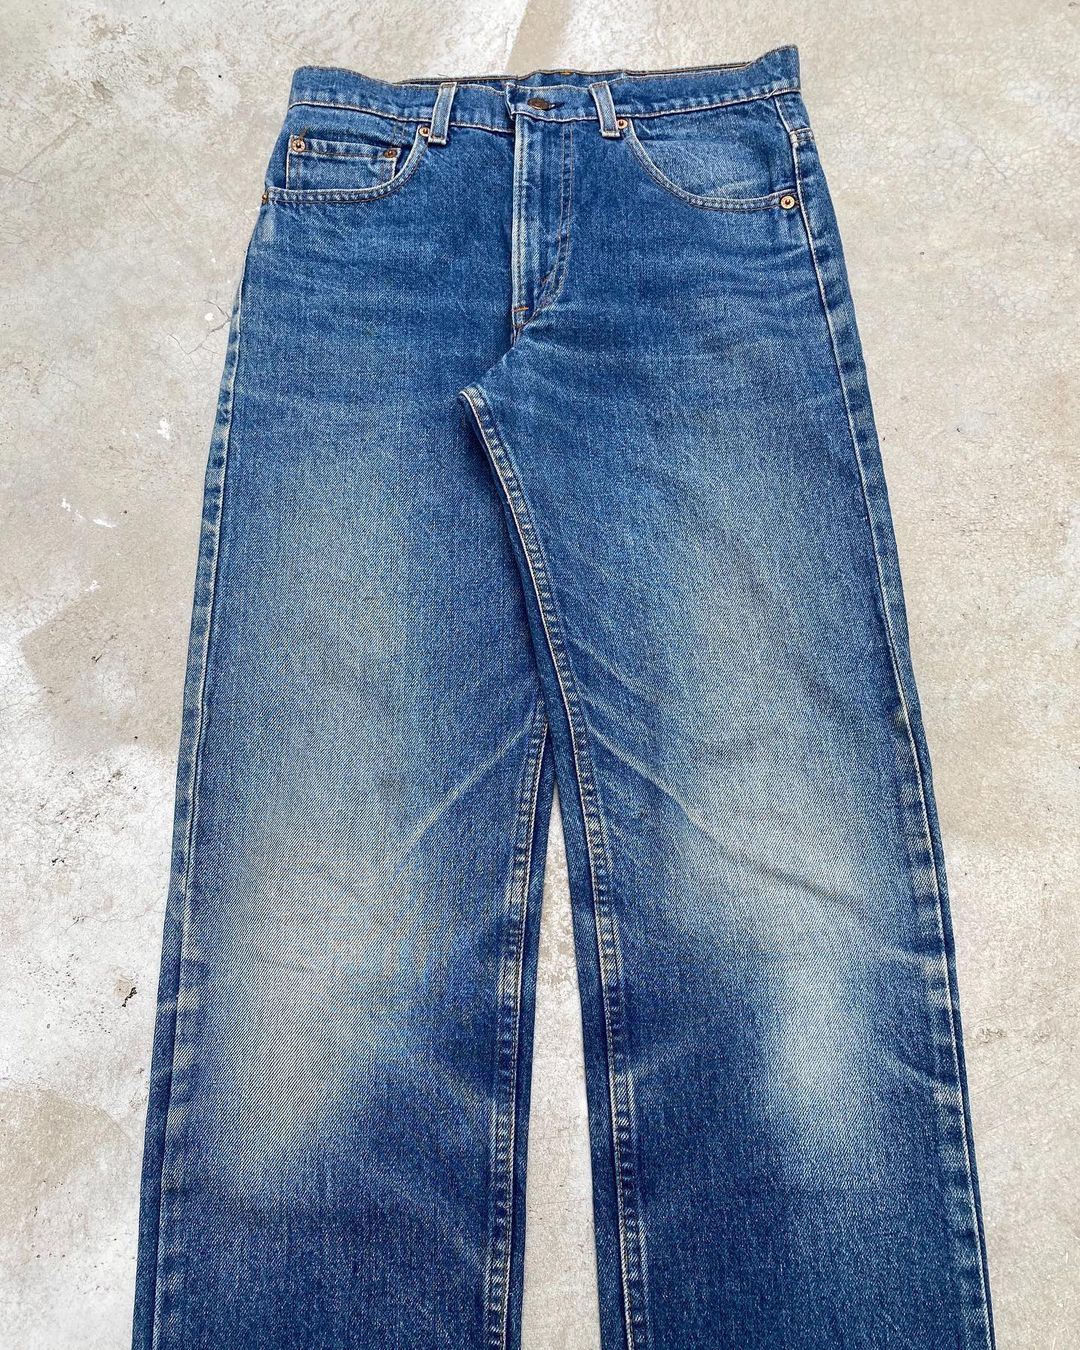 1980s Faded Indigo Levi’s 505 Jeans (31x34)